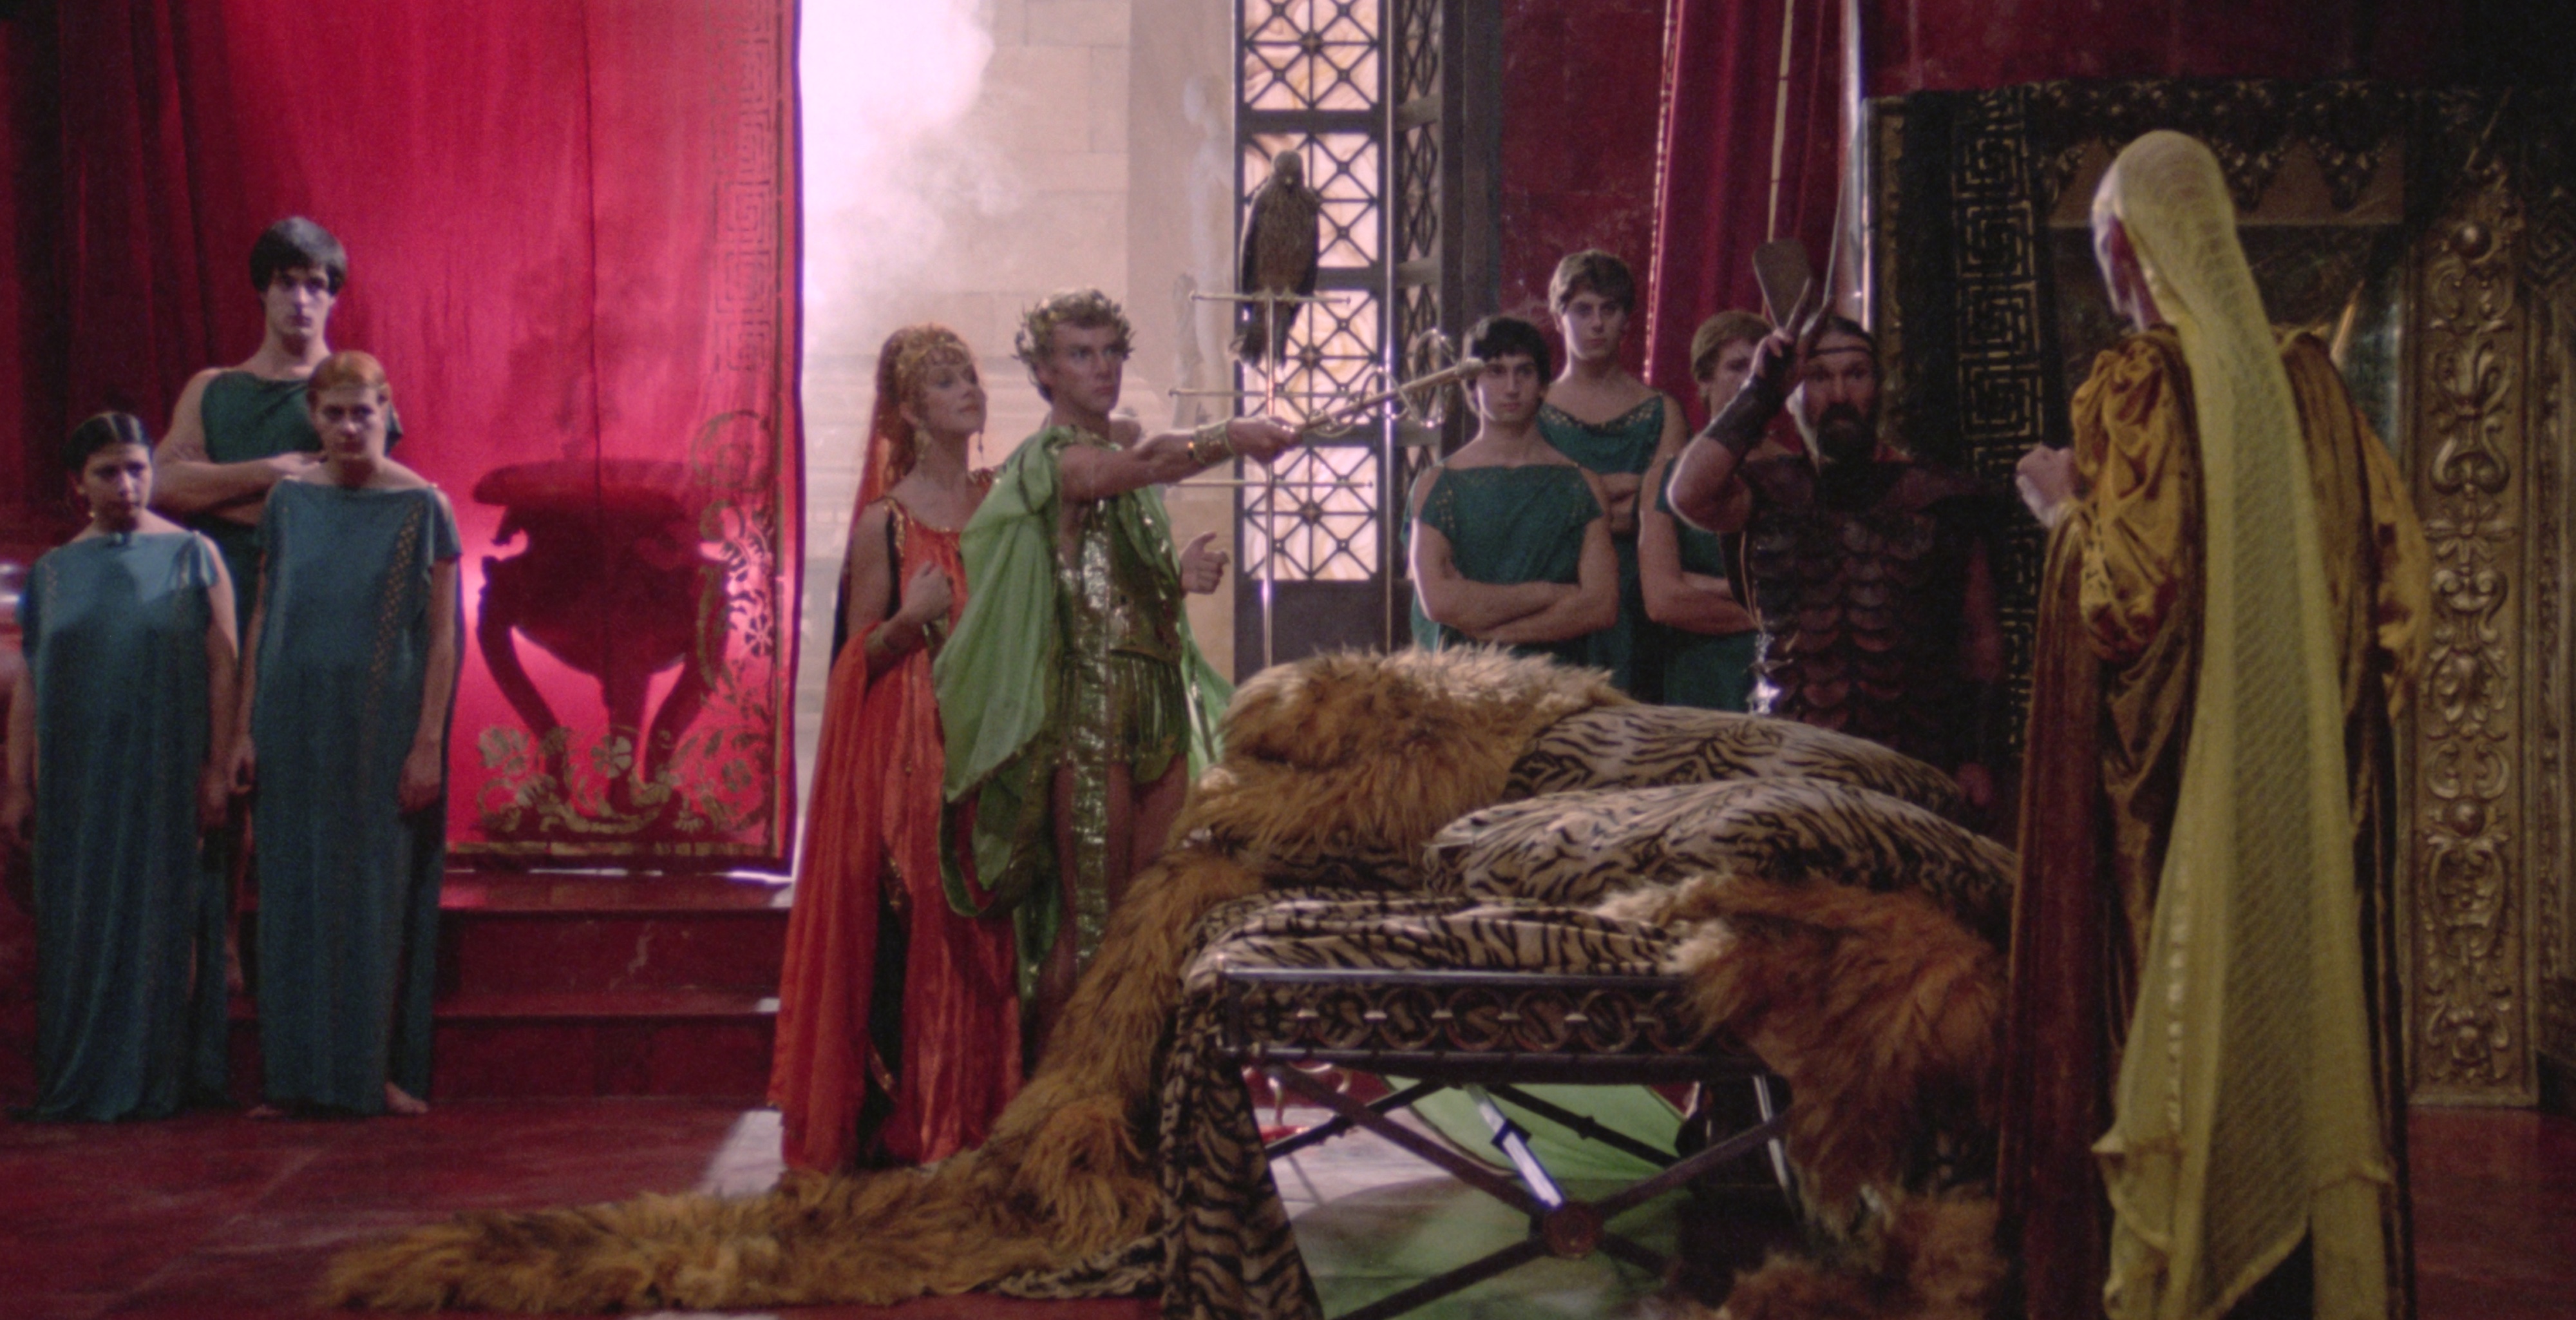 1980 Cult Classic “Caligula” Returns To The Big Screen For Its World